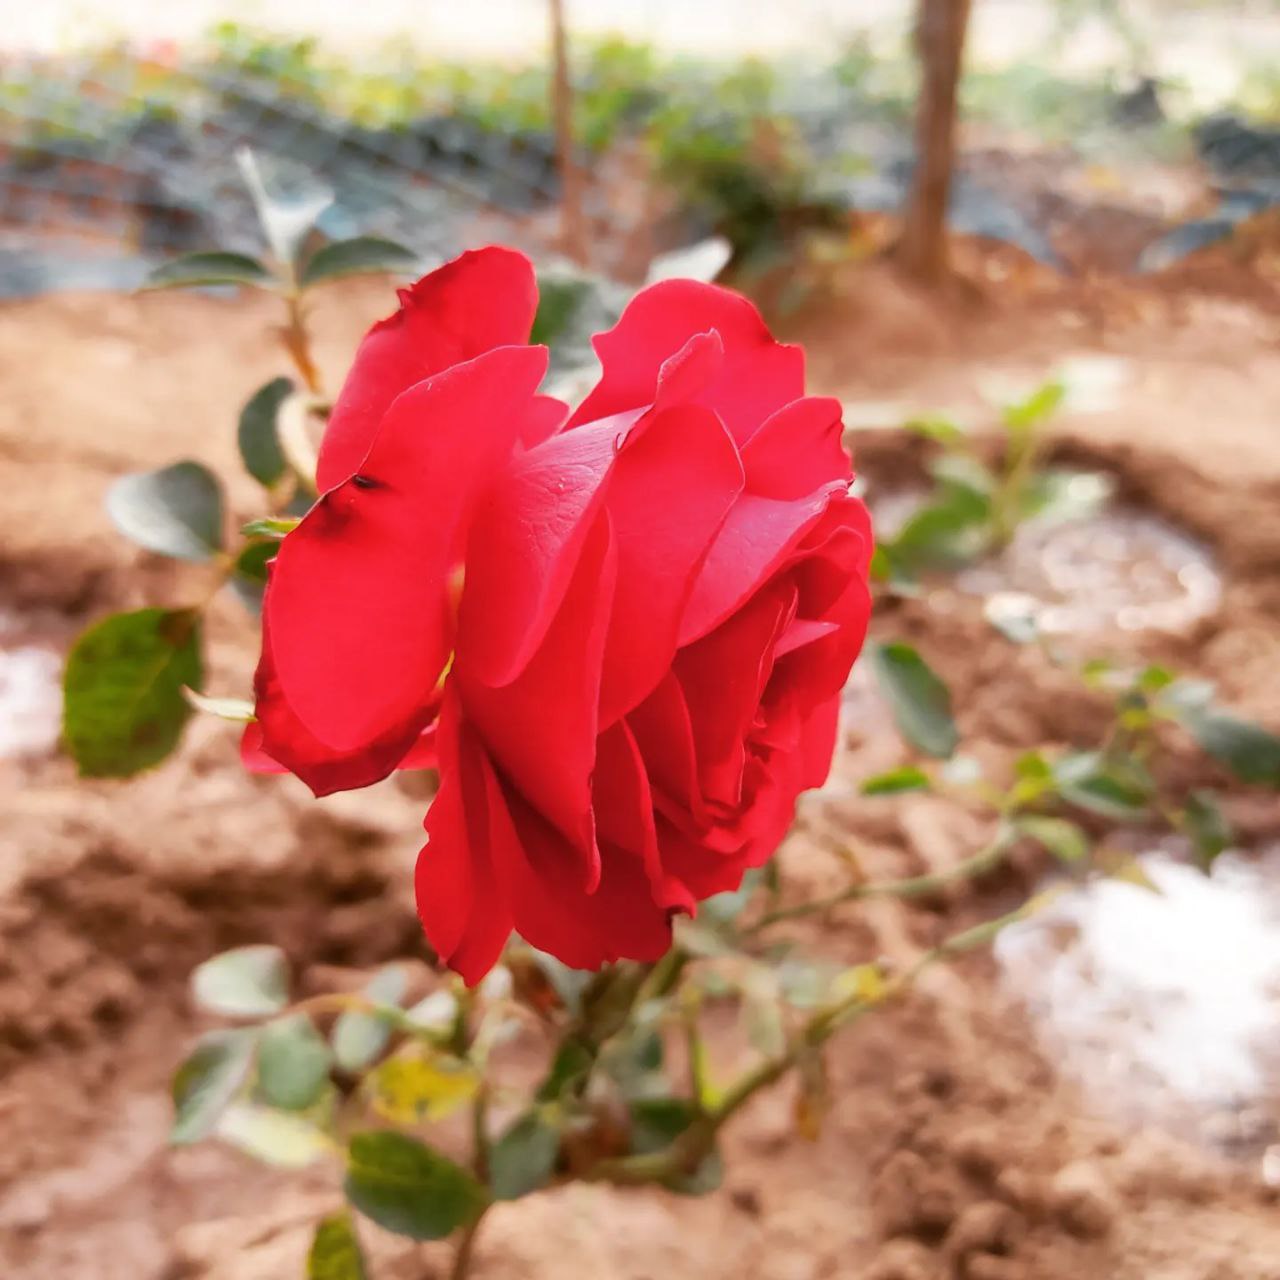 a red flower in a desert